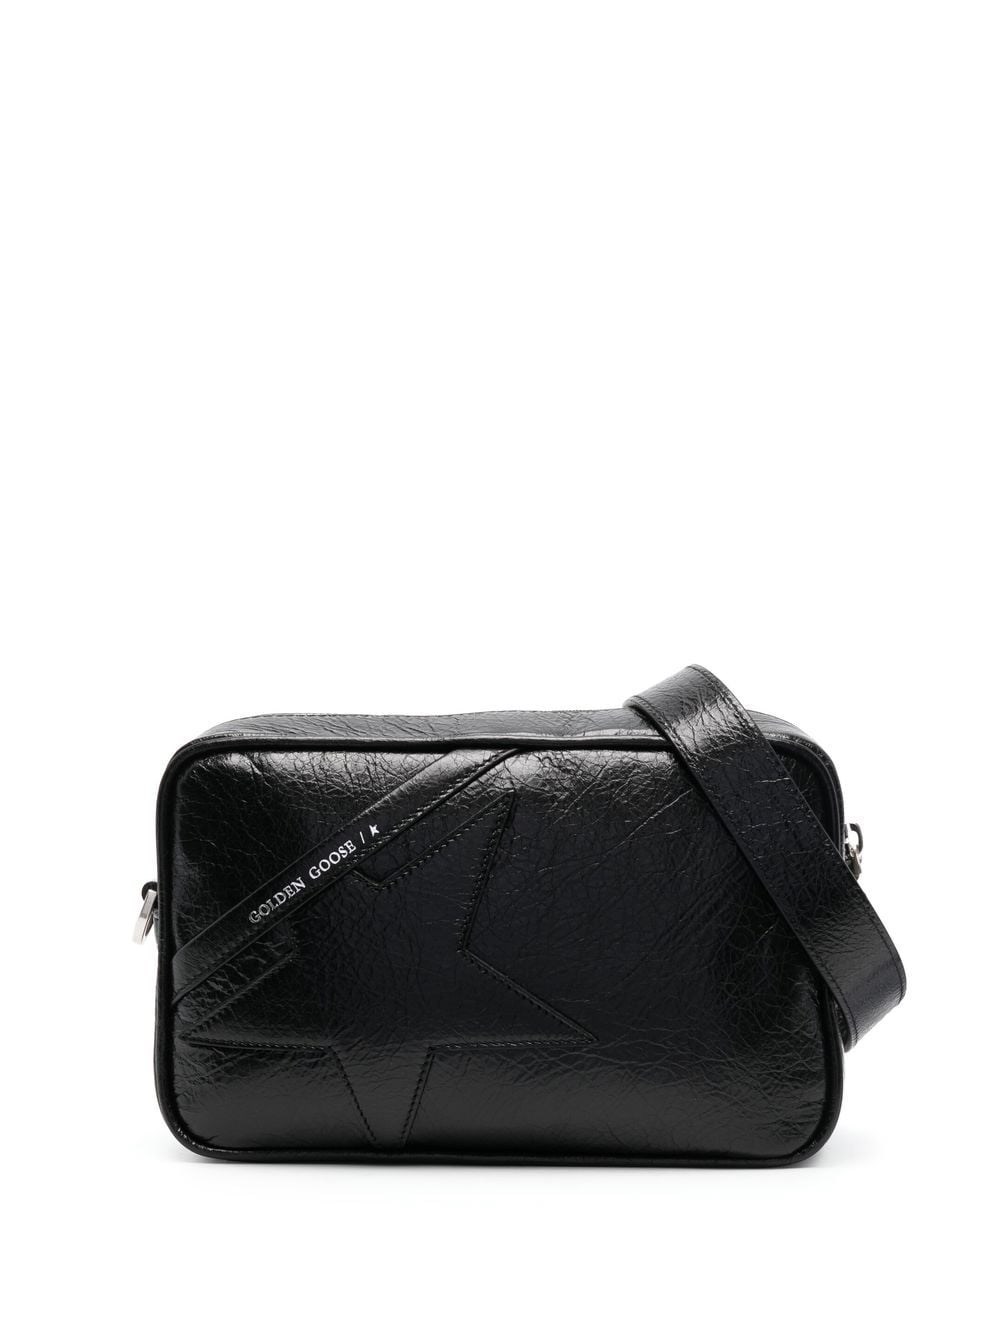 Golden Goose Star Bag In Shiny Leather In Black  